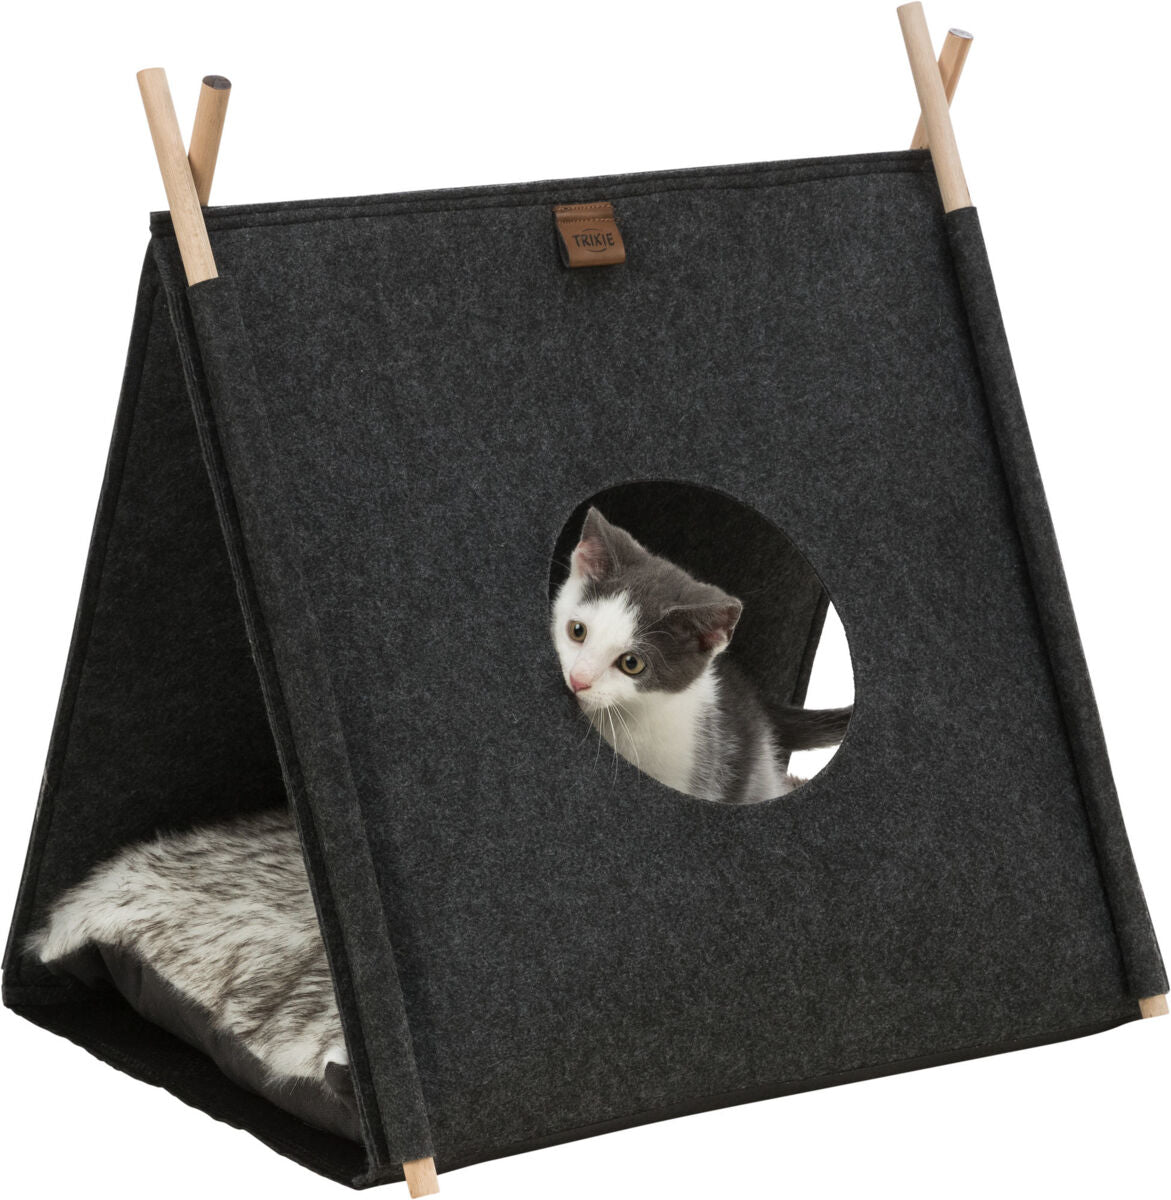 Trixie Beds for Cats - Elfie Cave